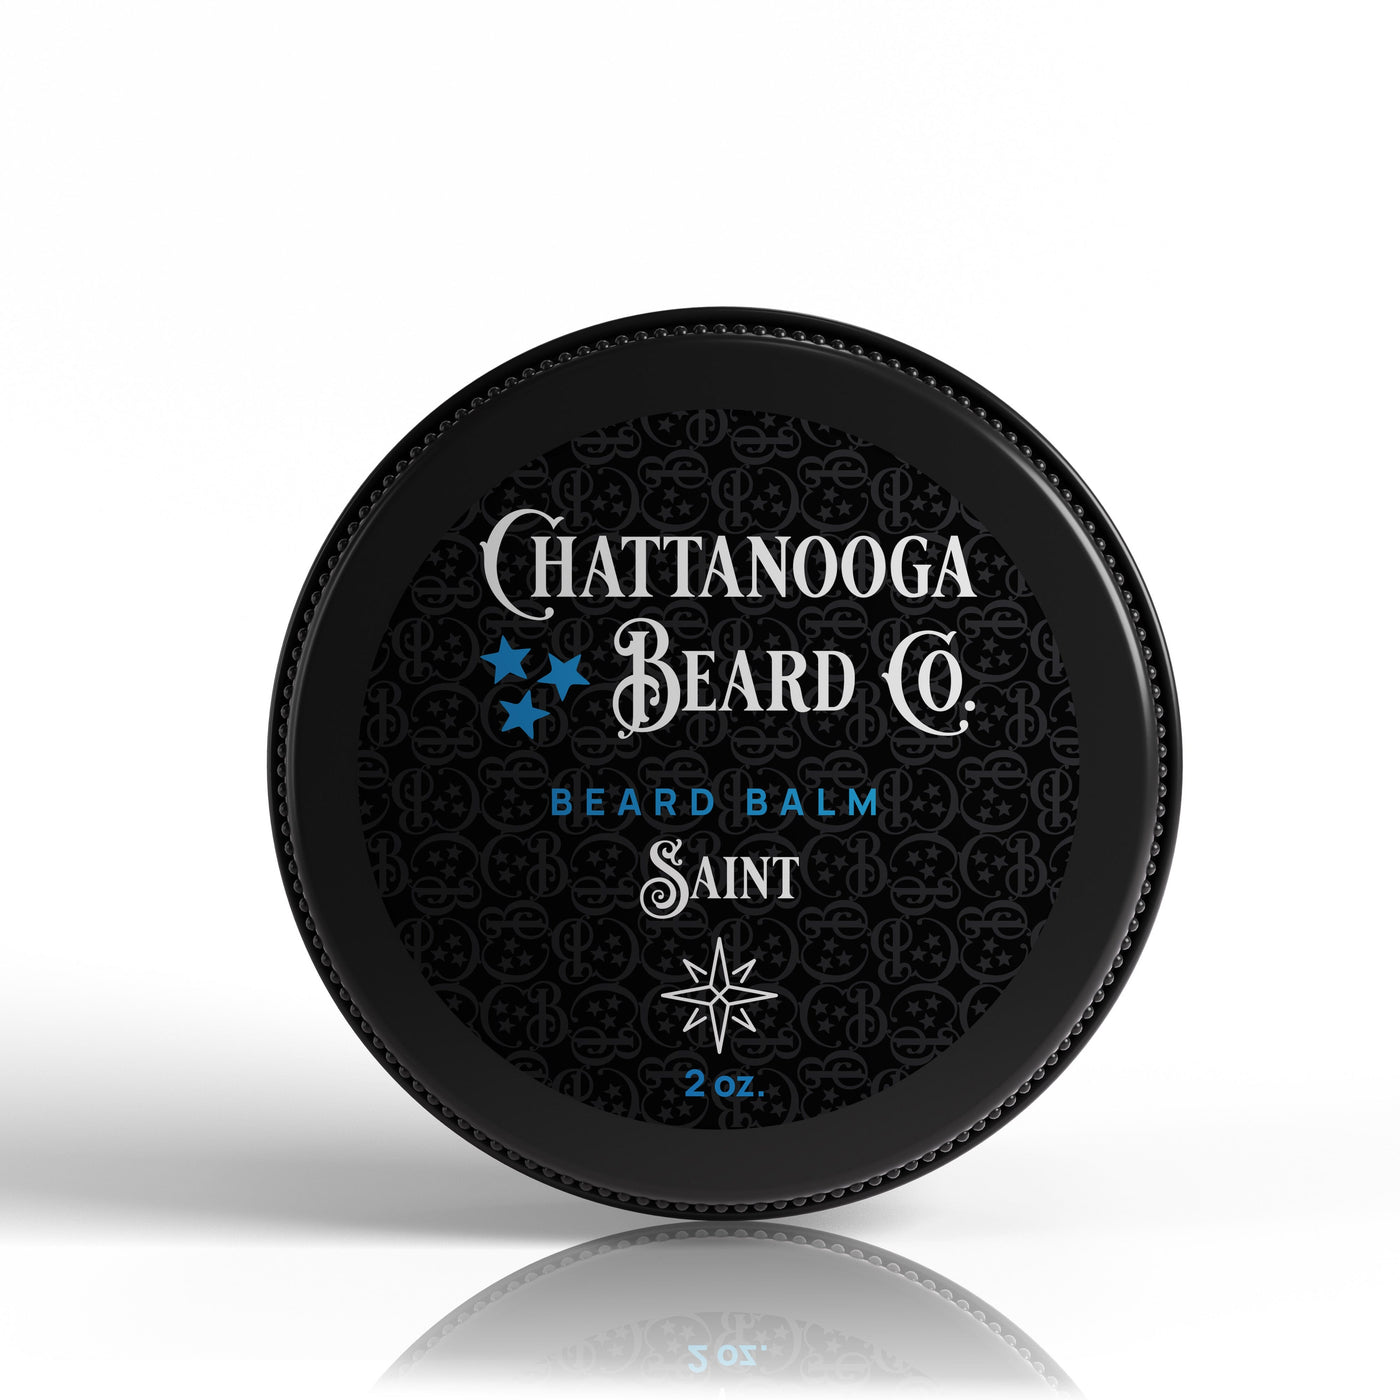 Chattanooga Beard Co. - Beard Balm Balm Chattanooga Beard Co. Saint 